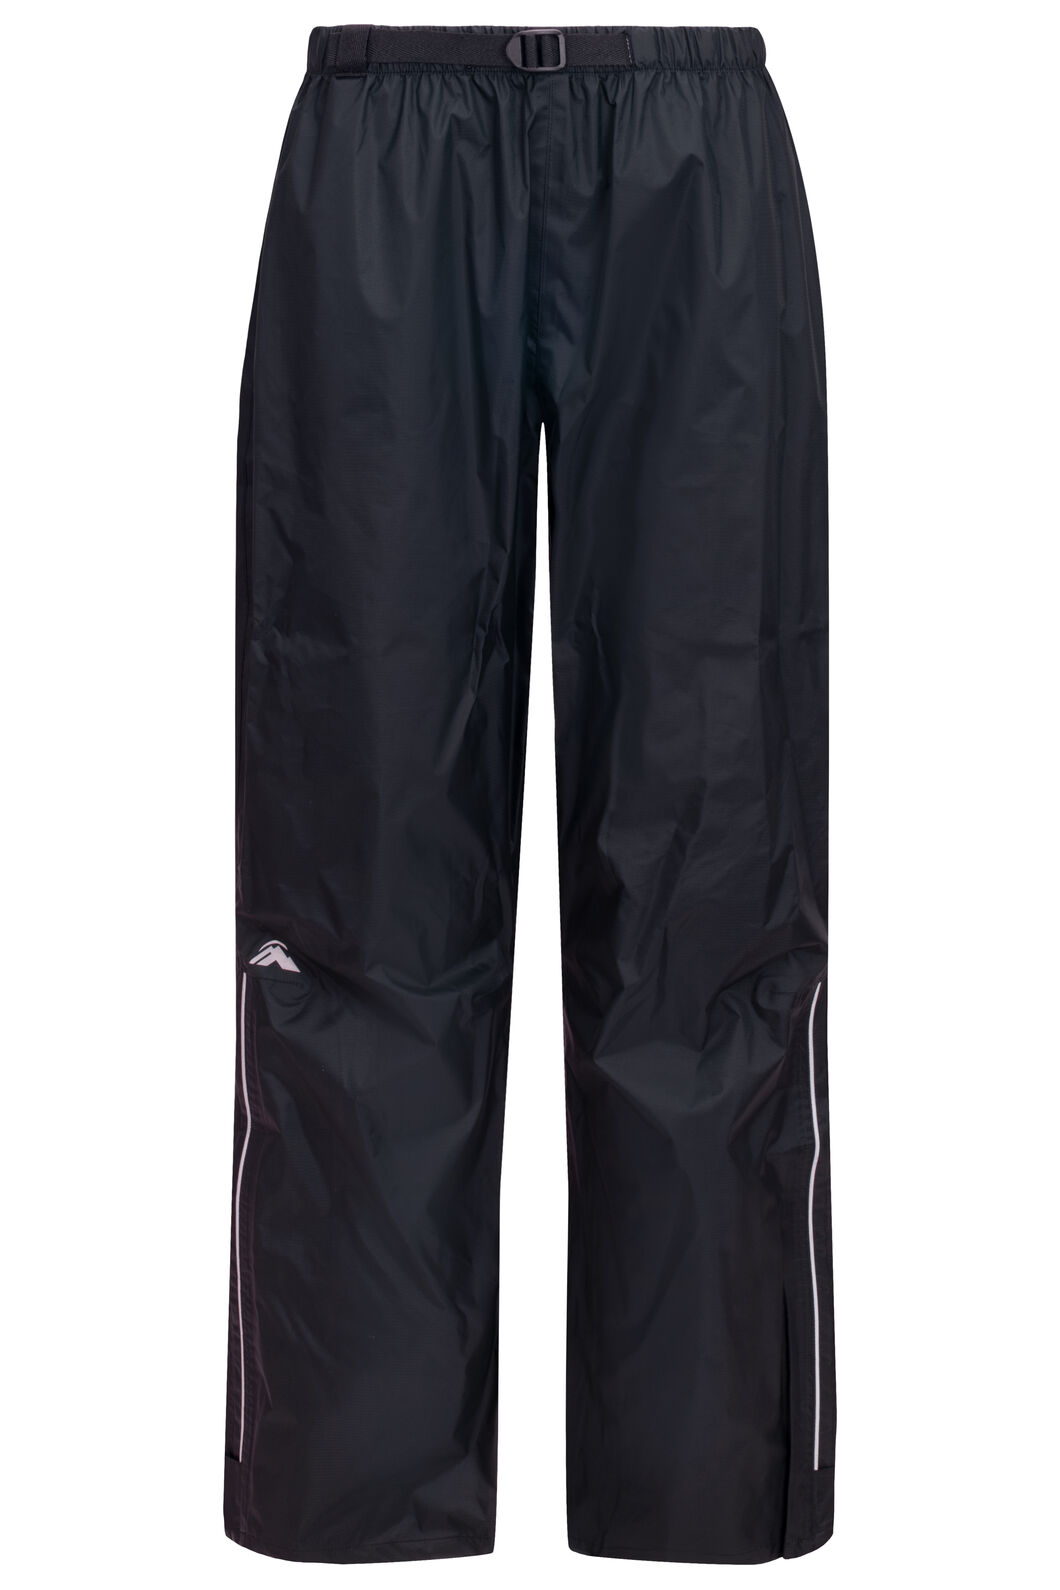 Waterproof Pants: Do You Need Them?